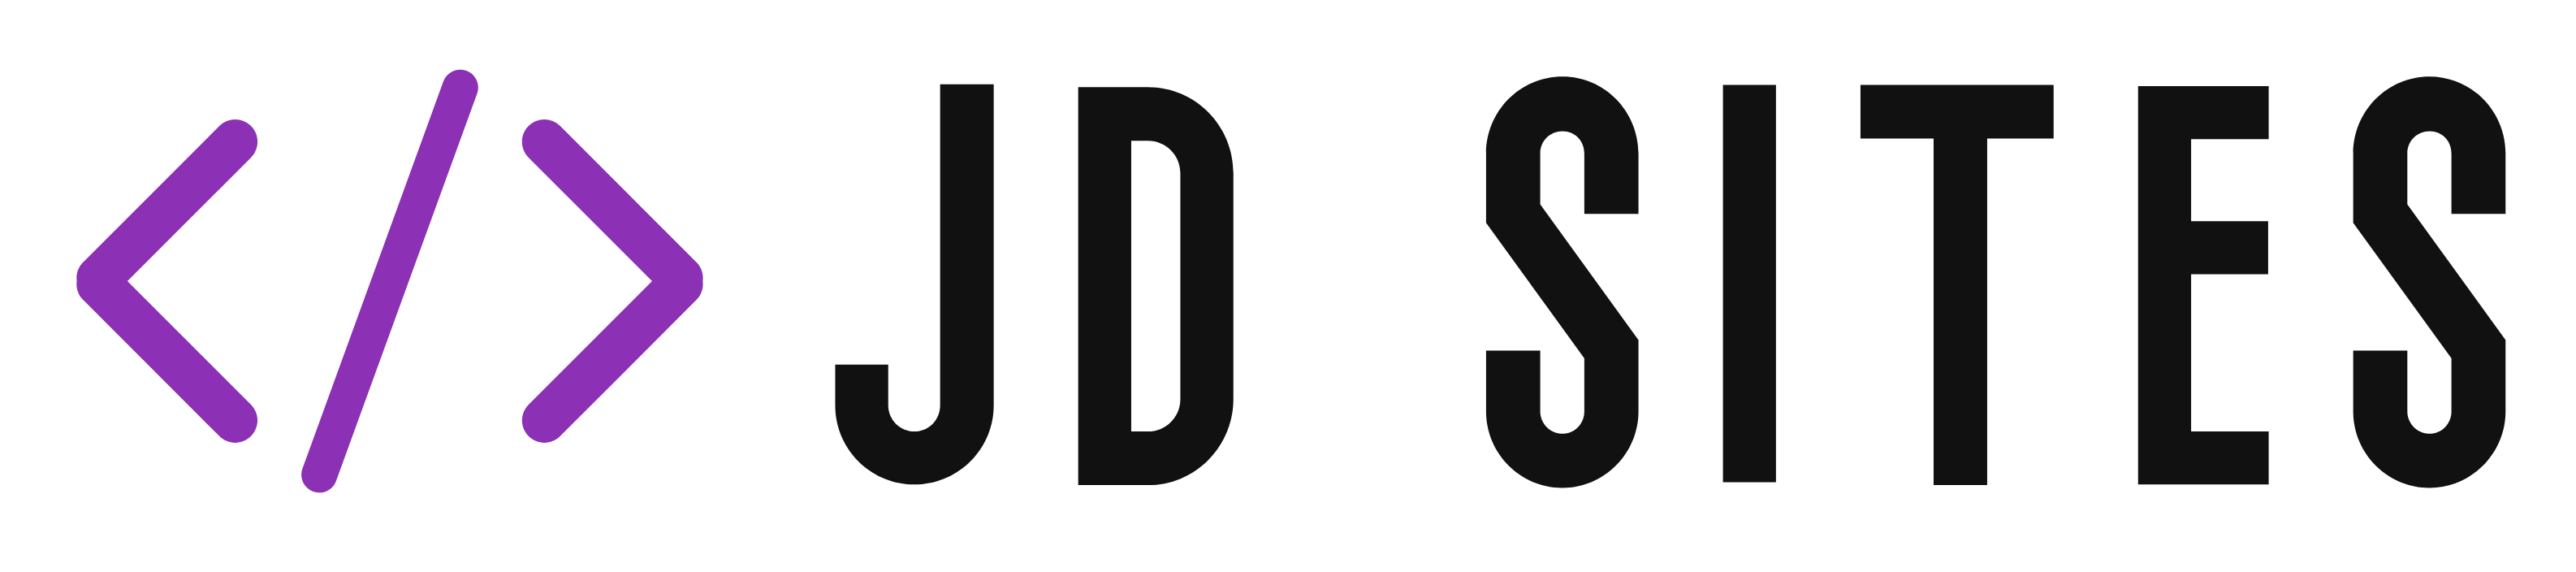 JD Sites Logo